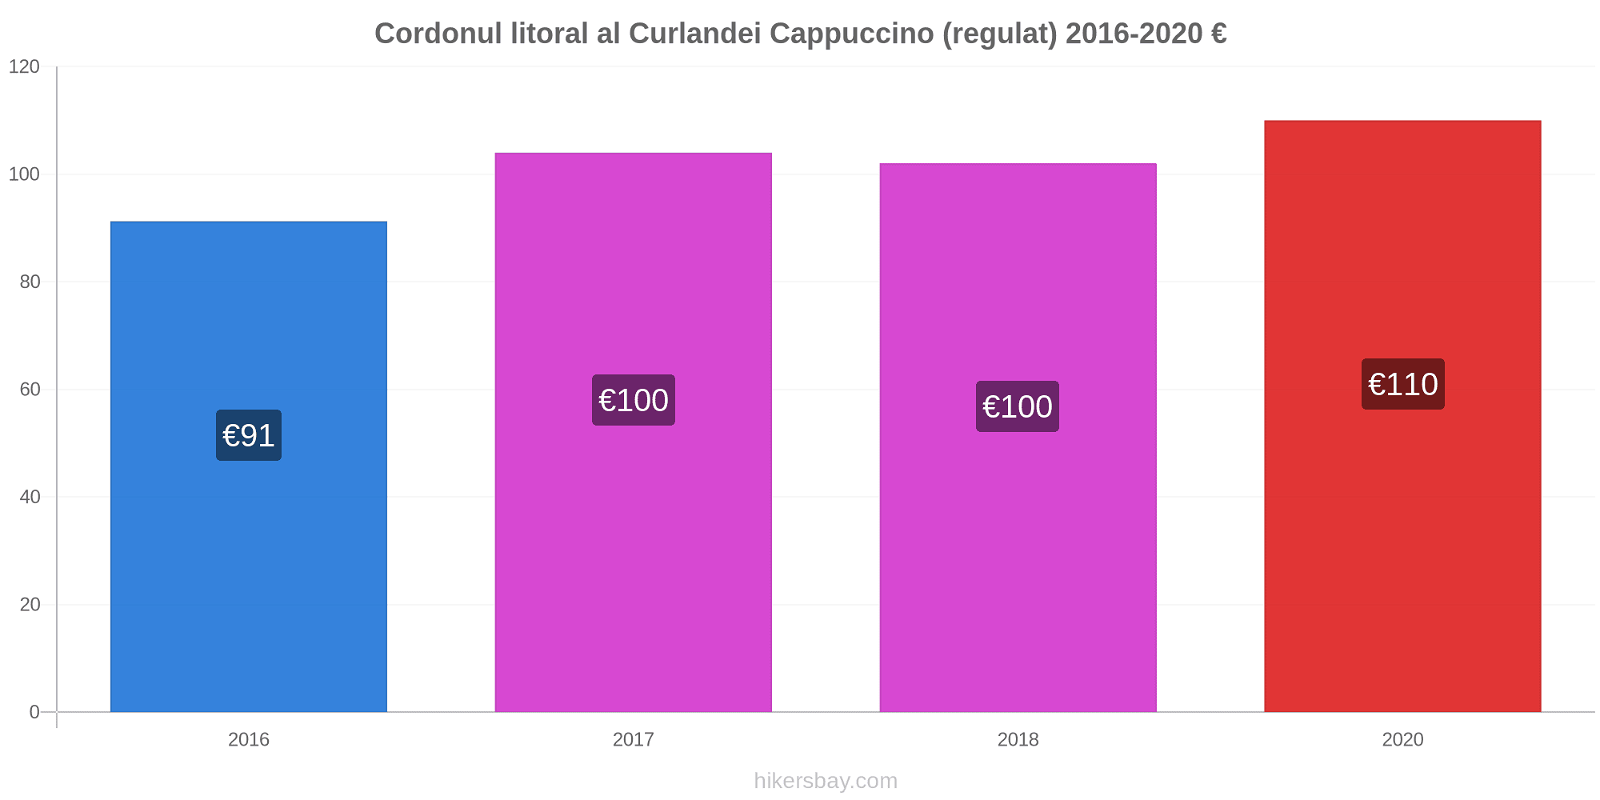 Cordonul litoral al Curlandei modificări de preț Cappuccino (regulat) hikersbay.com